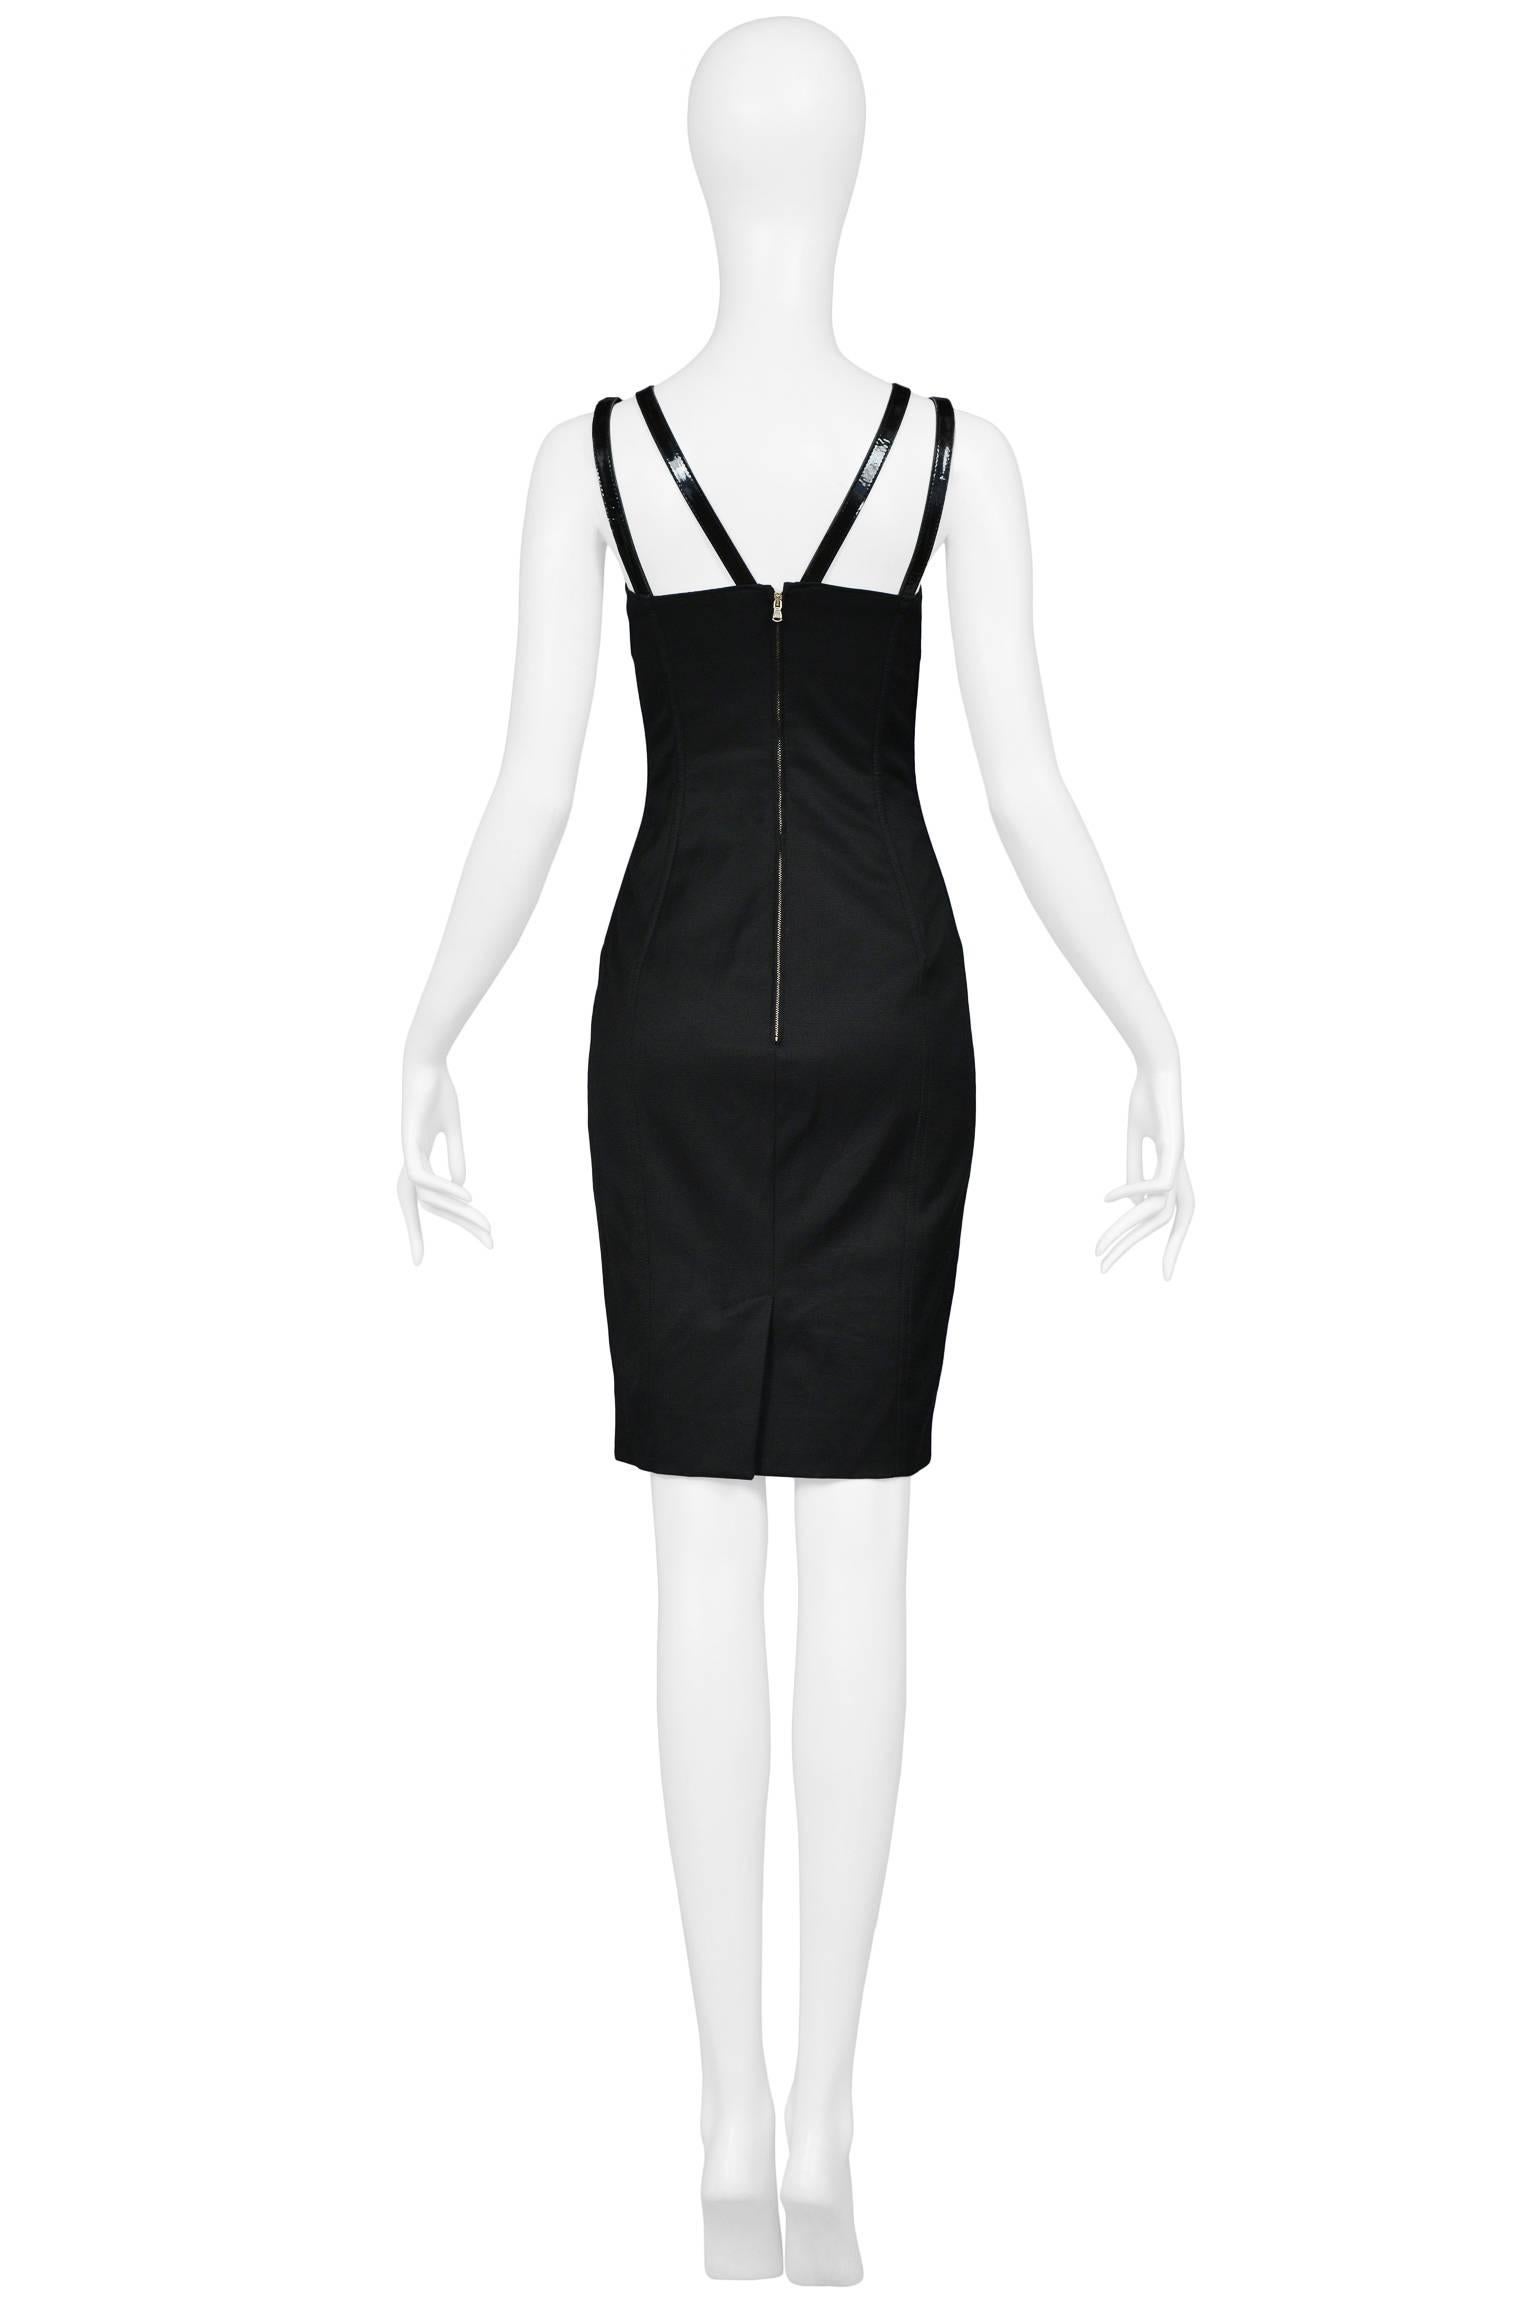 Women's Dolce & Gabbana Black Bondage Bustier Dress w Double V Patent Straps 2007